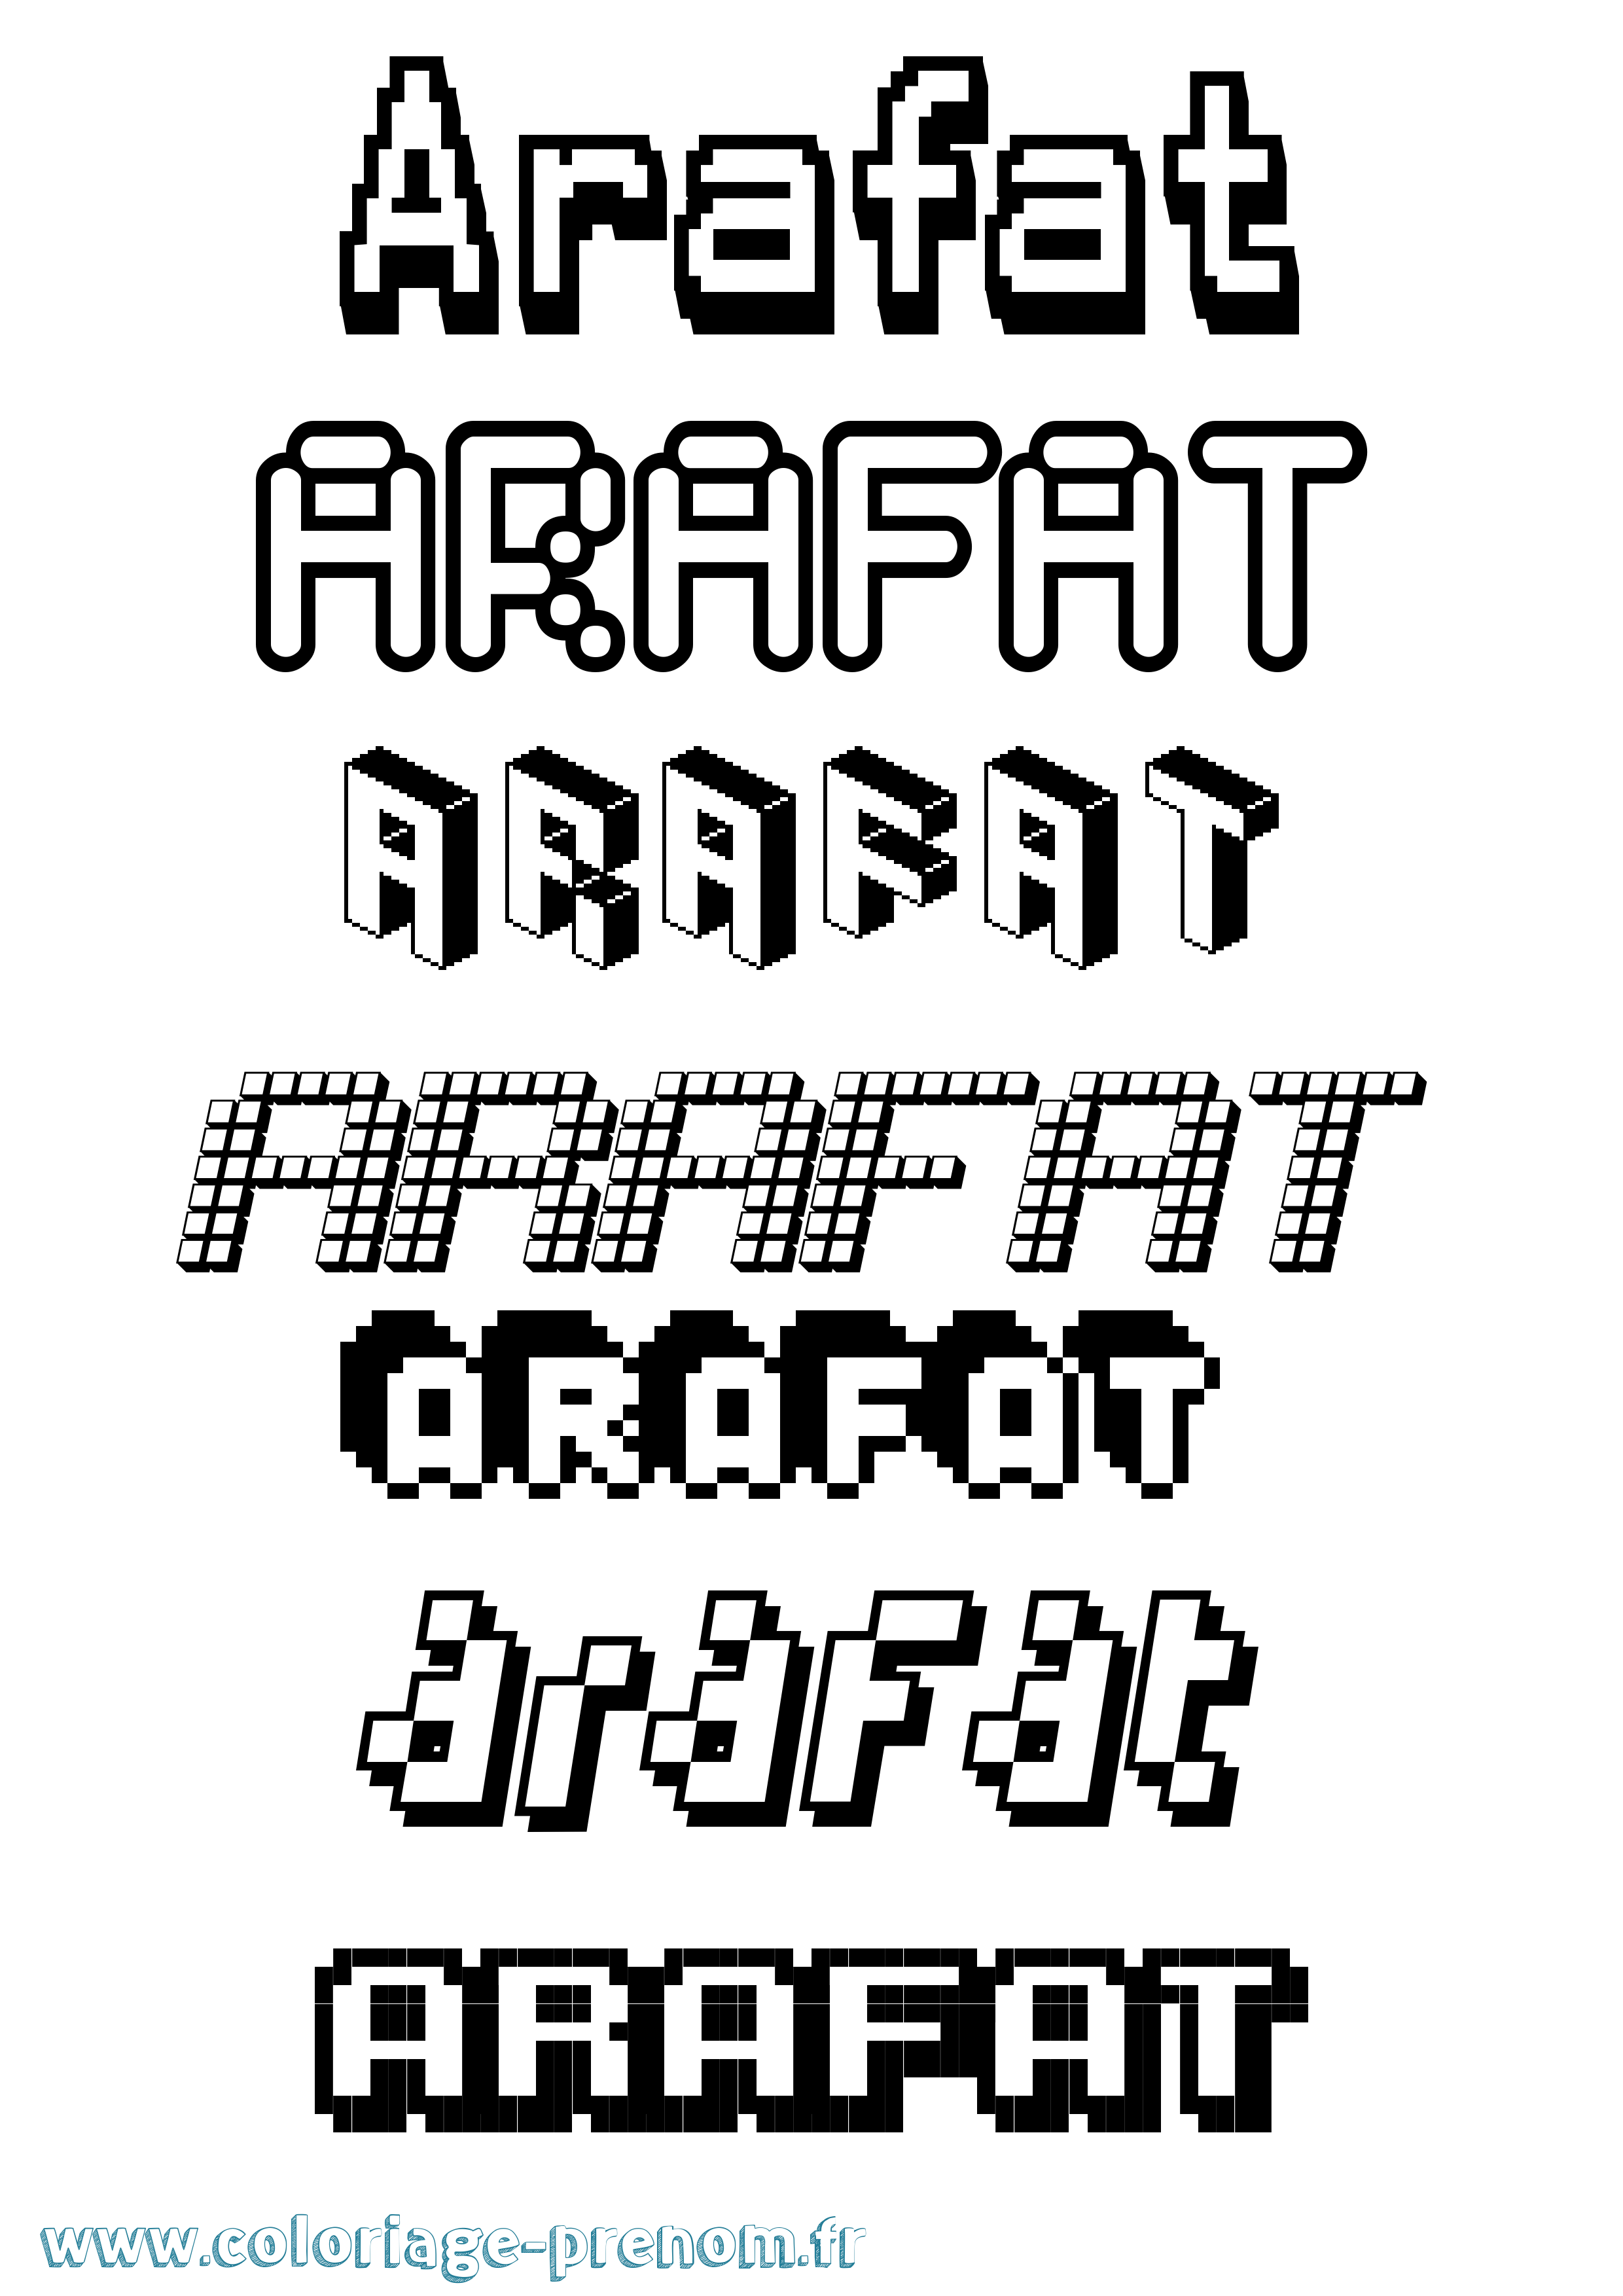 Coloriage prénom Arafat Pixel